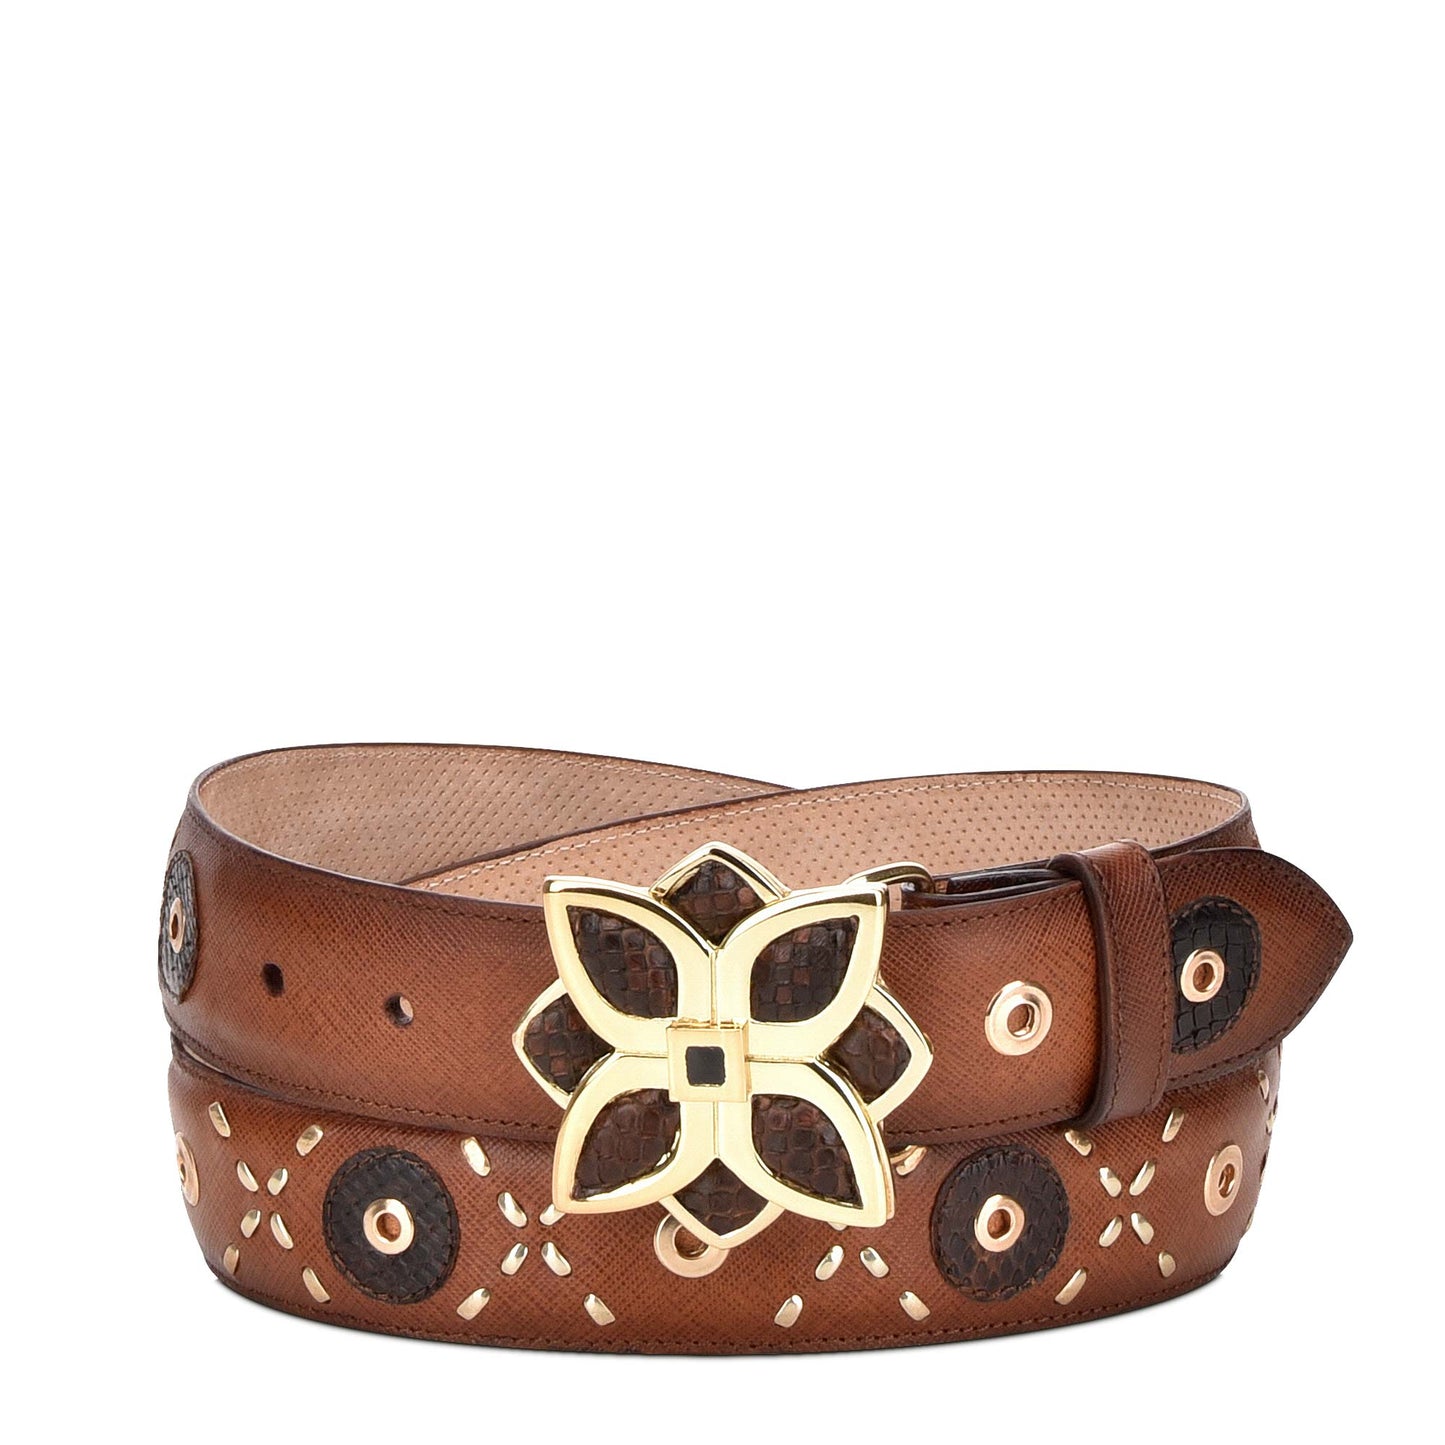 Handwoven honey leather belt